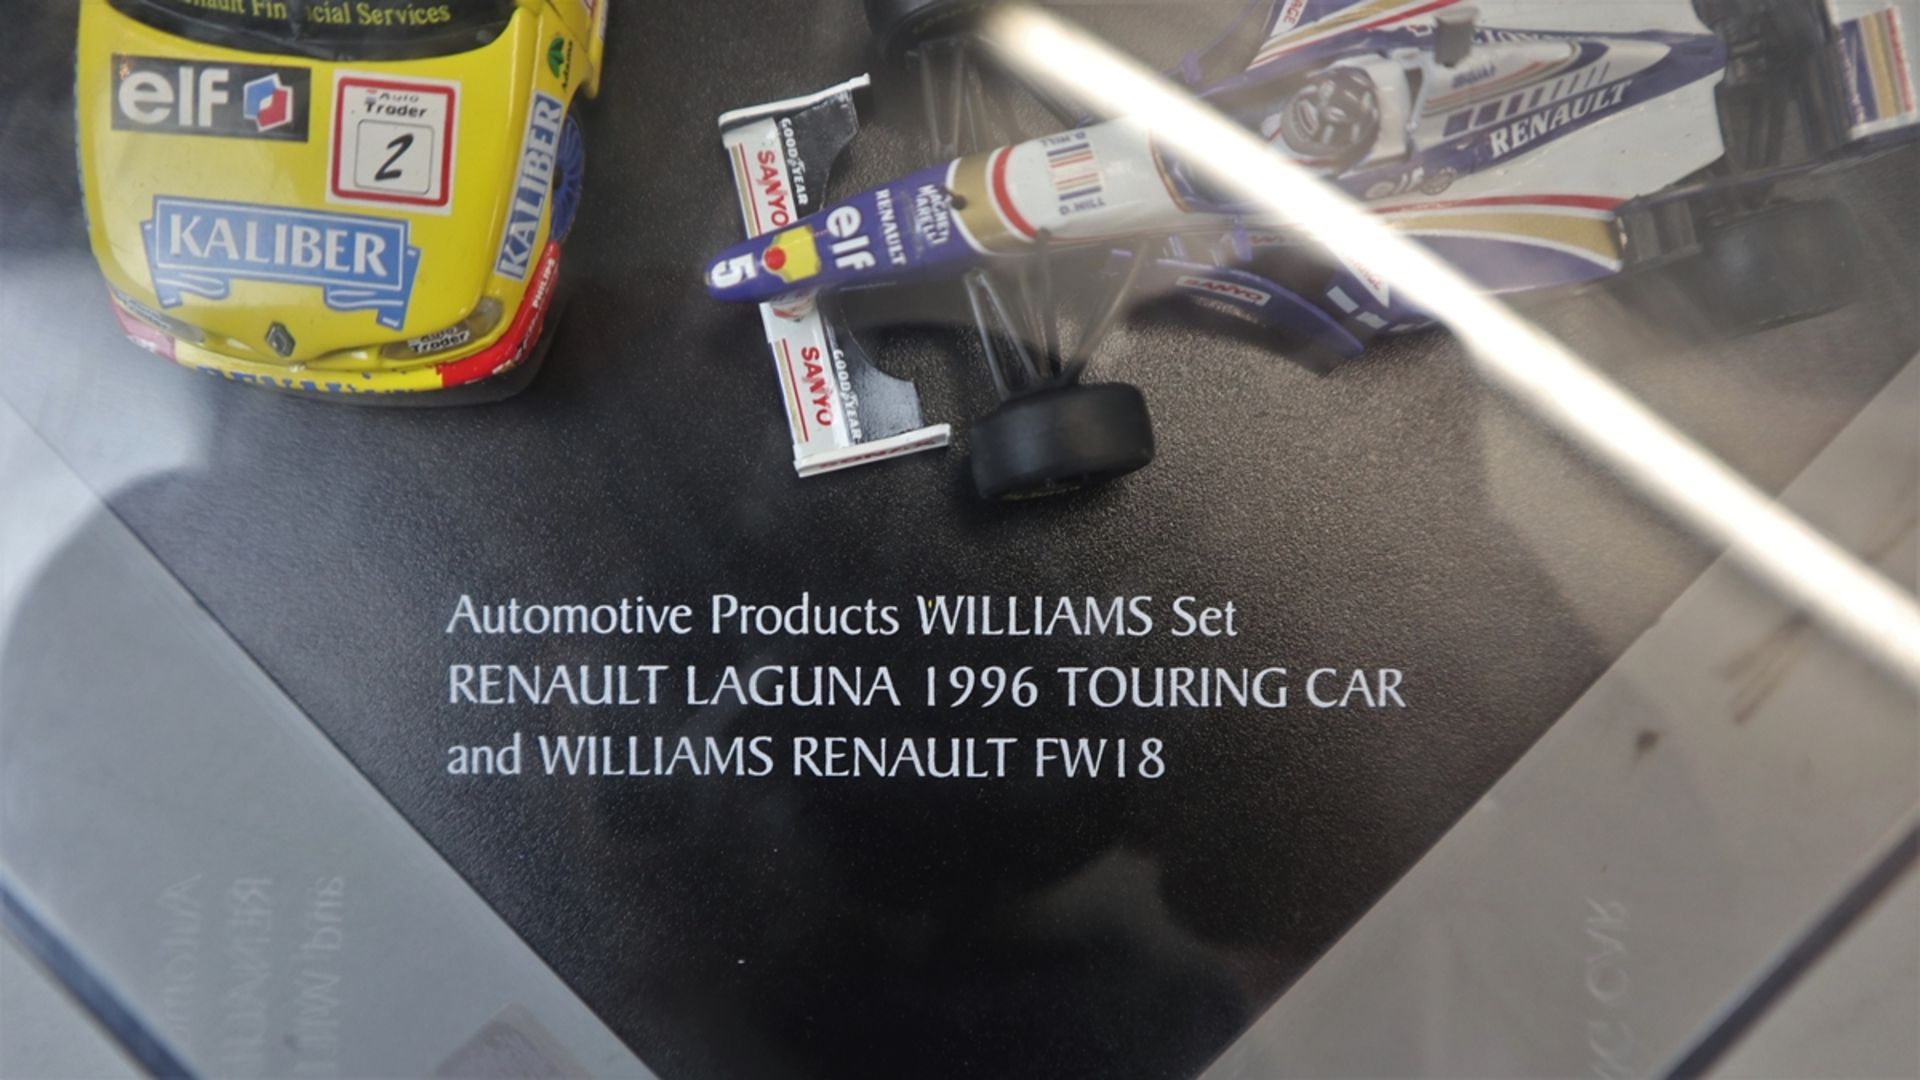 Model Renault Laguna 1996 touring car set together with a model Winchester J2 - Image 5 of 5